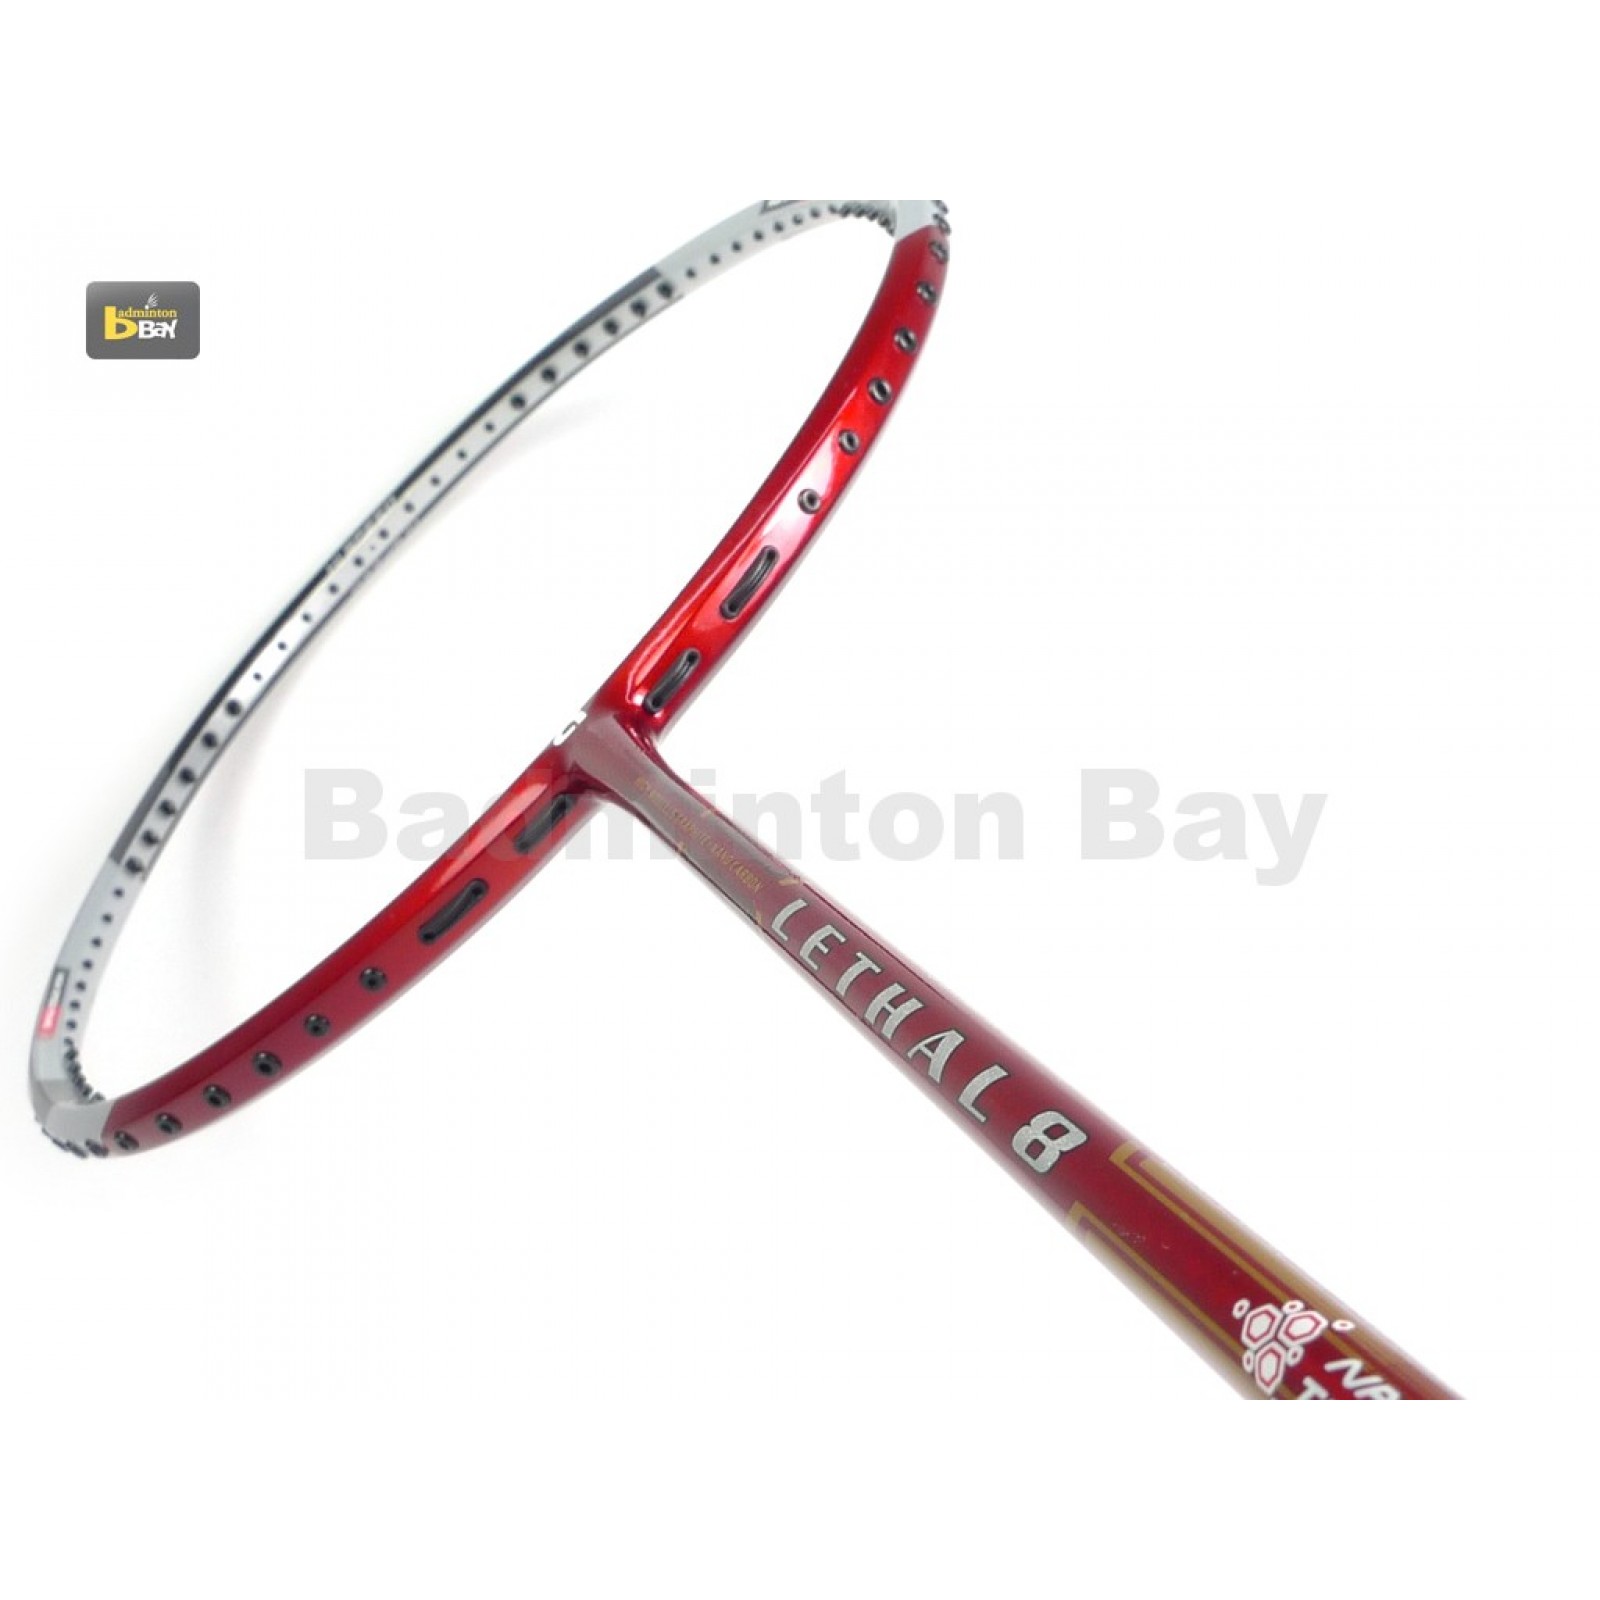 Apacs Badminton Racket Lethal 8